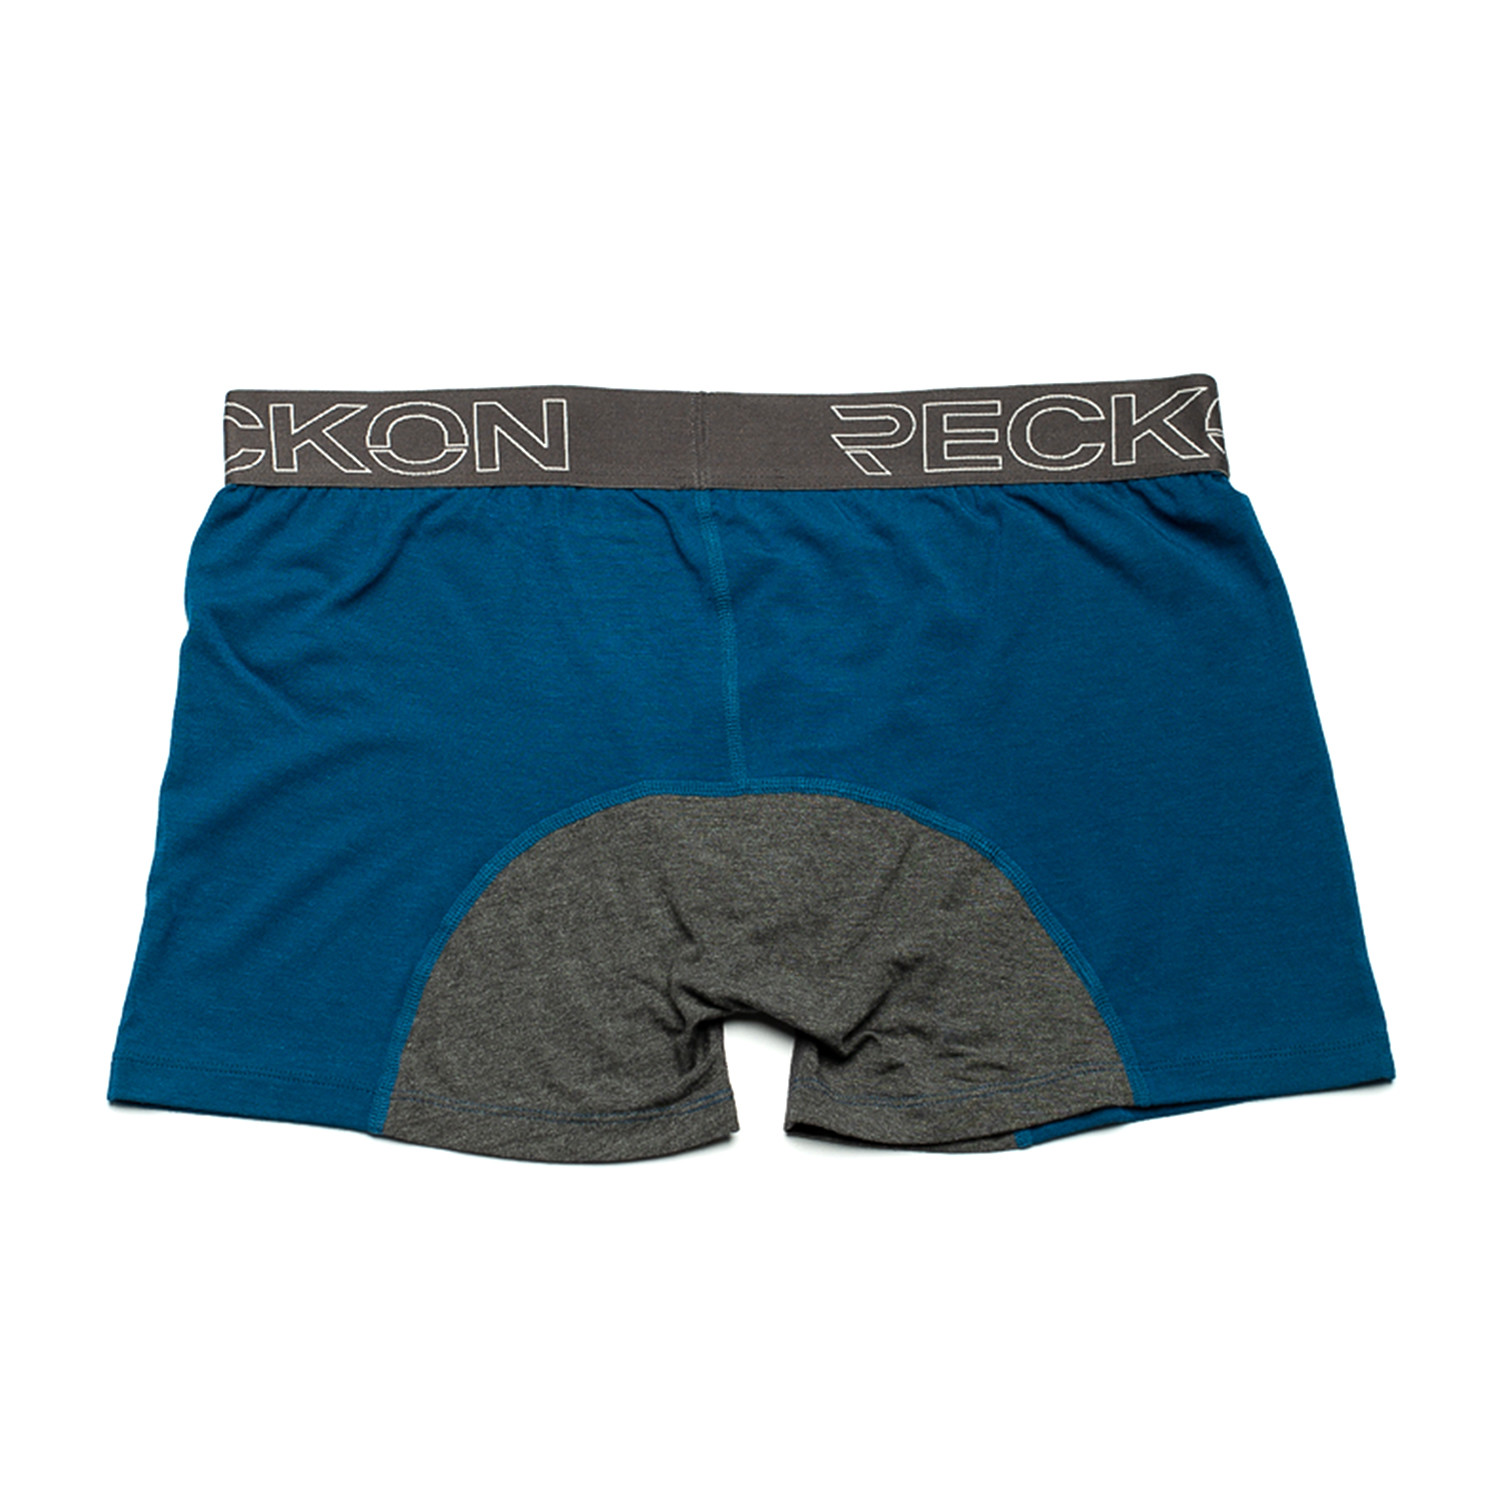 Boxer Briefs // Blue + Heather Charcoal Gray (S) - Reckon Underwear ...